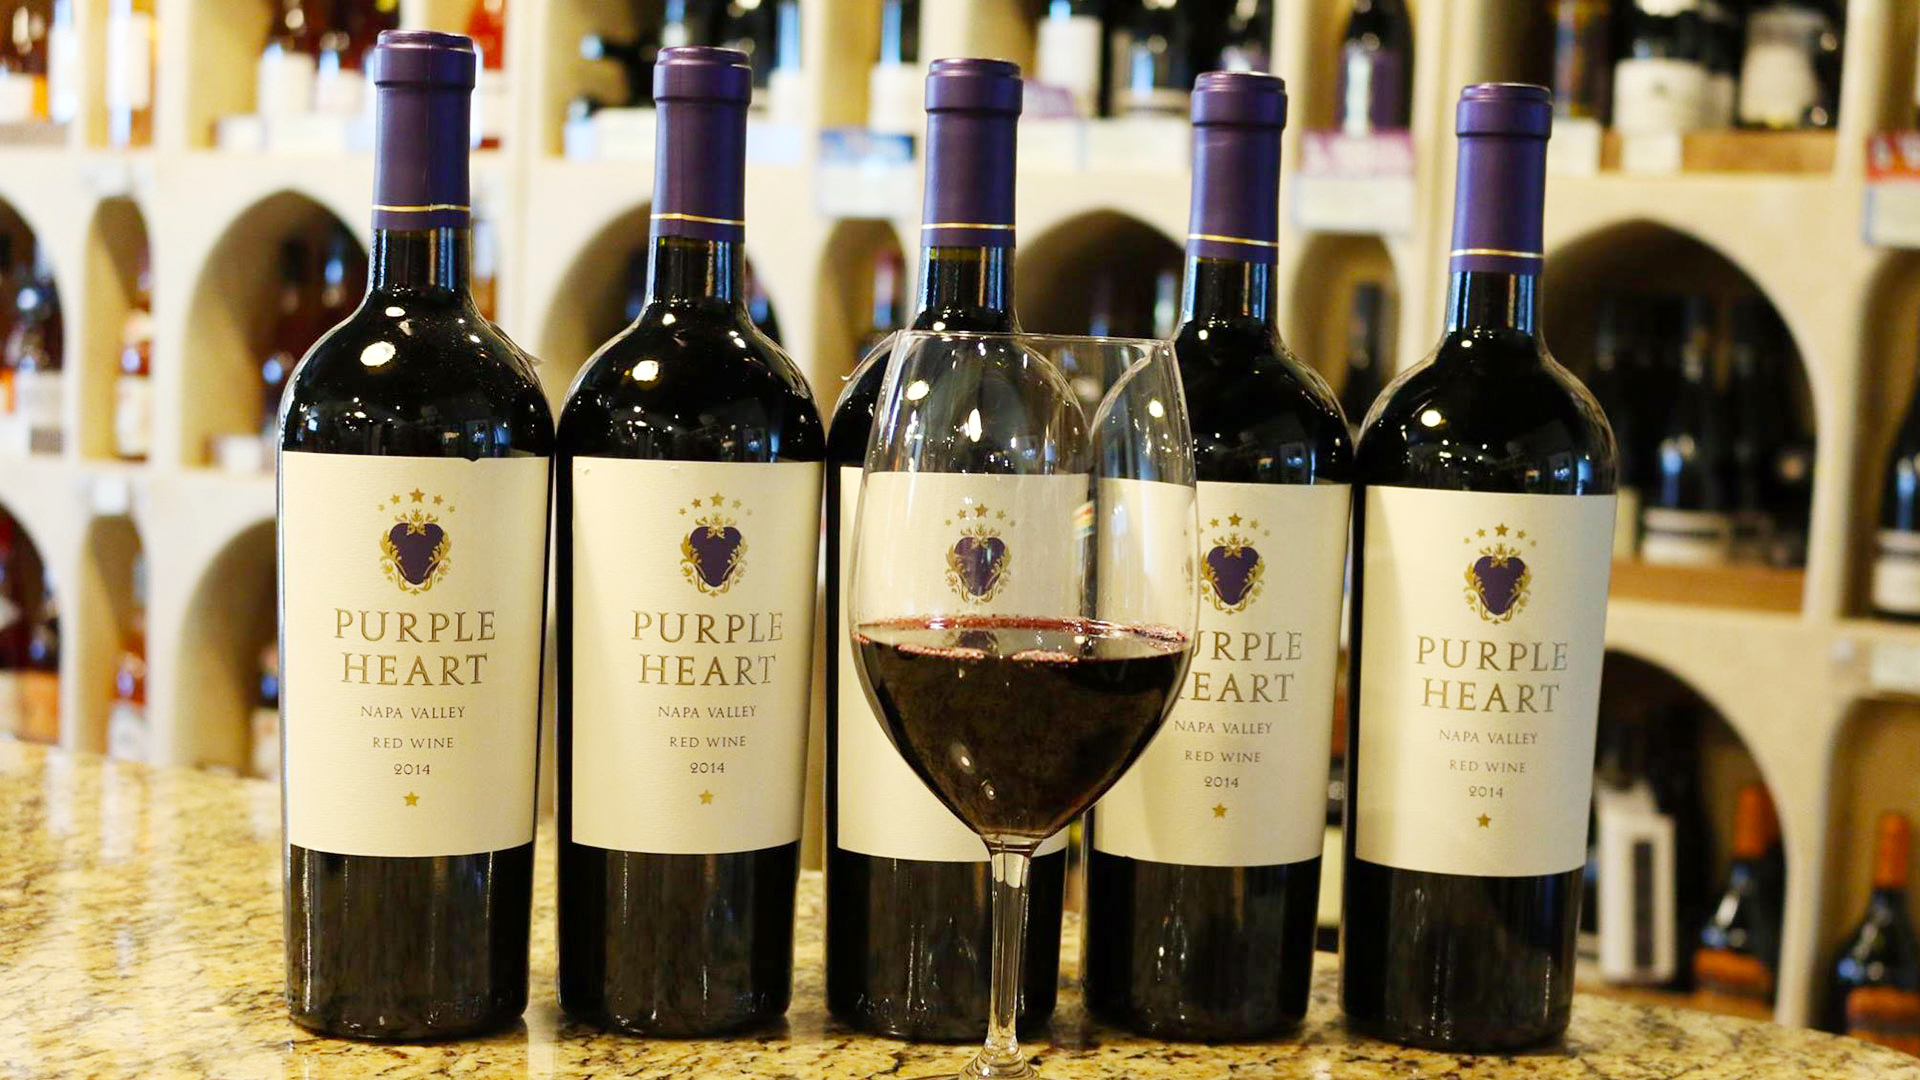 Purple Heart Foundation Fundraiser with Purple Heart Wines